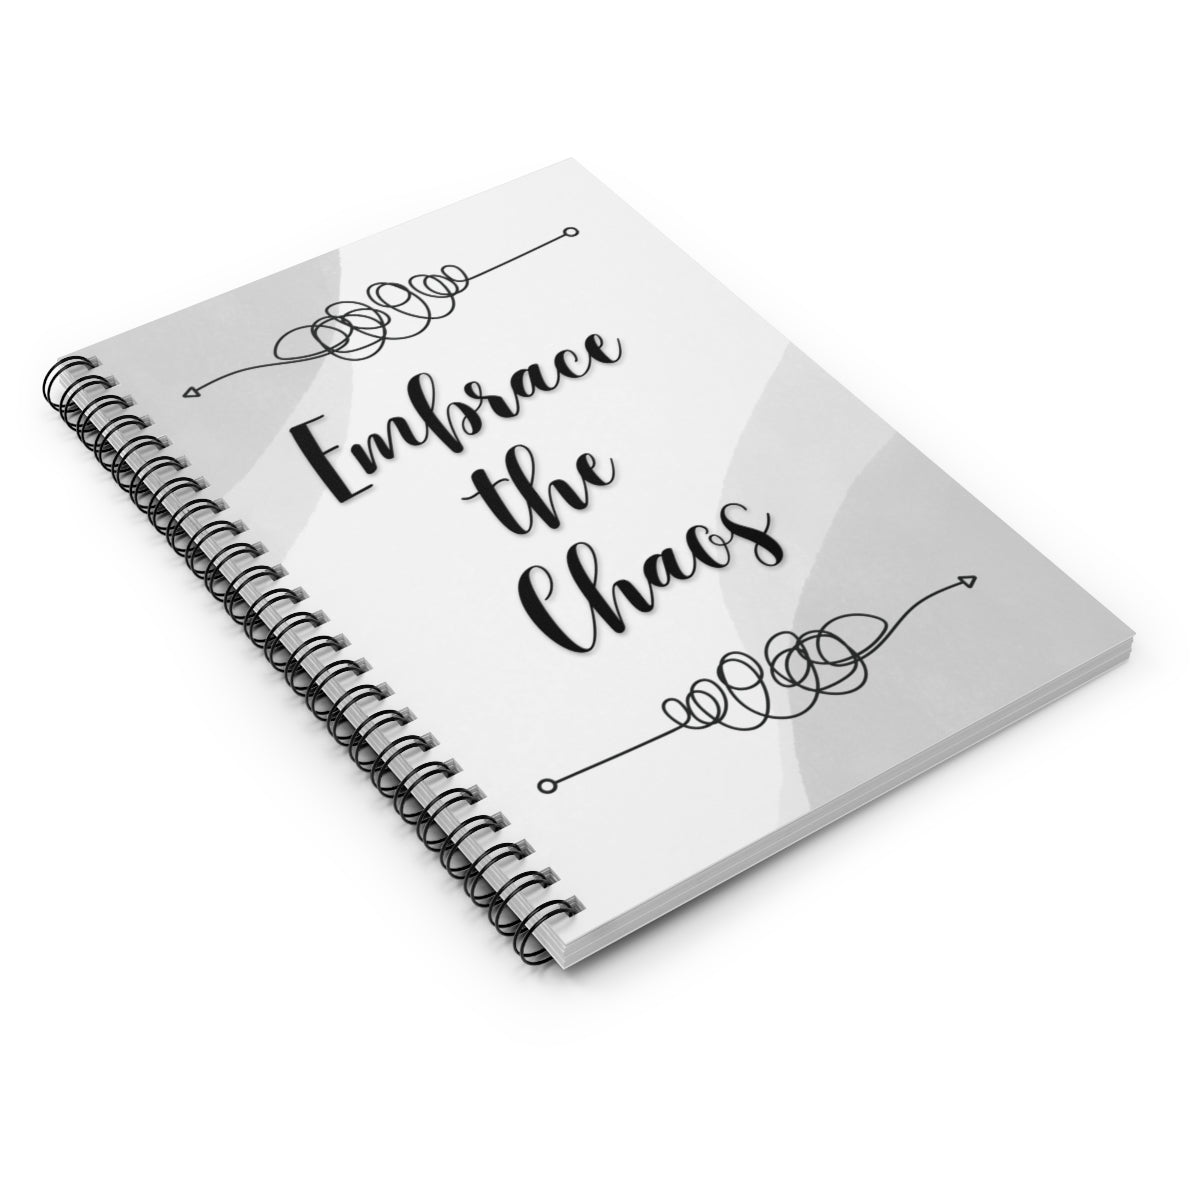 Embrace the Chaos Spiral Notebook/Journal